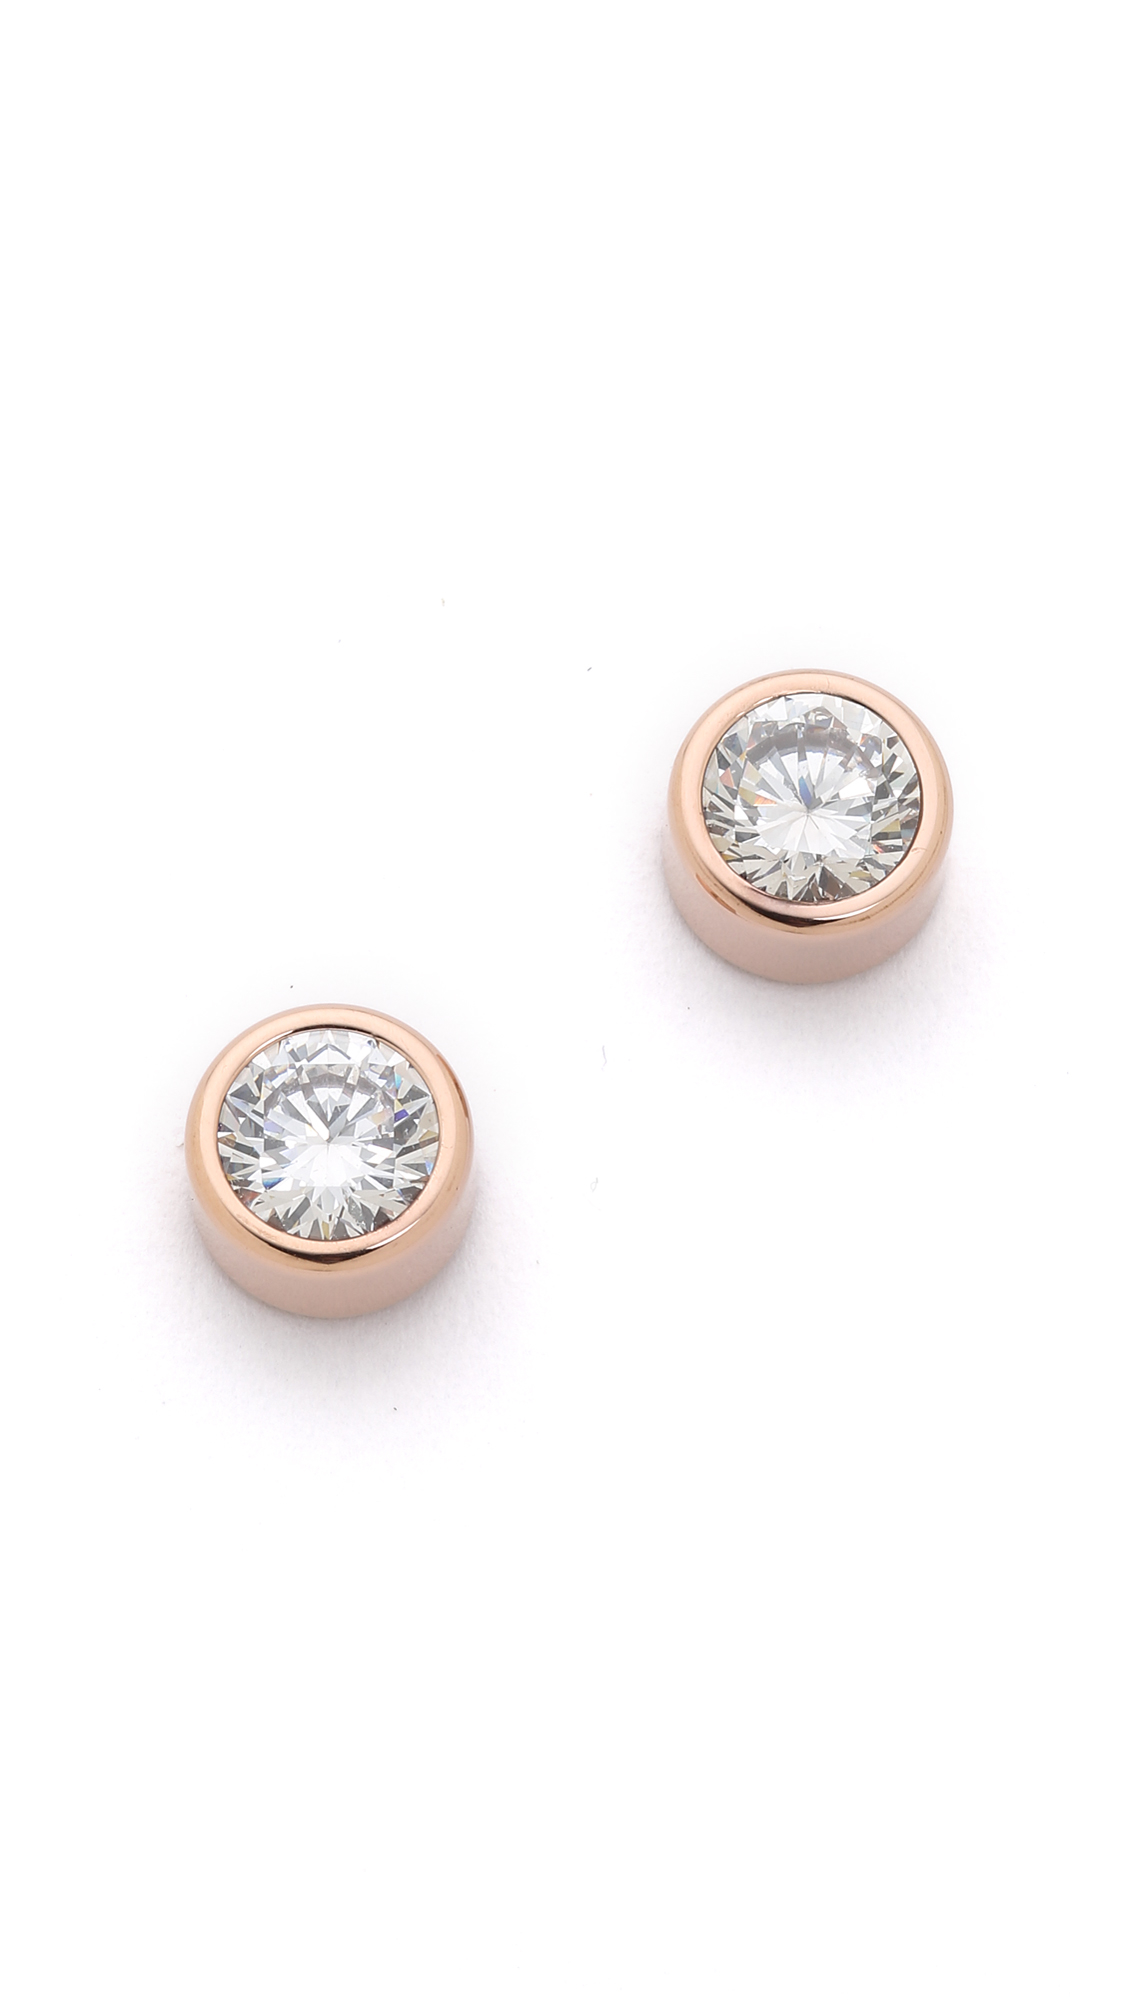 Michael Kors Park Avenue Cut Stud Earrings - Rose Gold/clear in Pink - Lyst